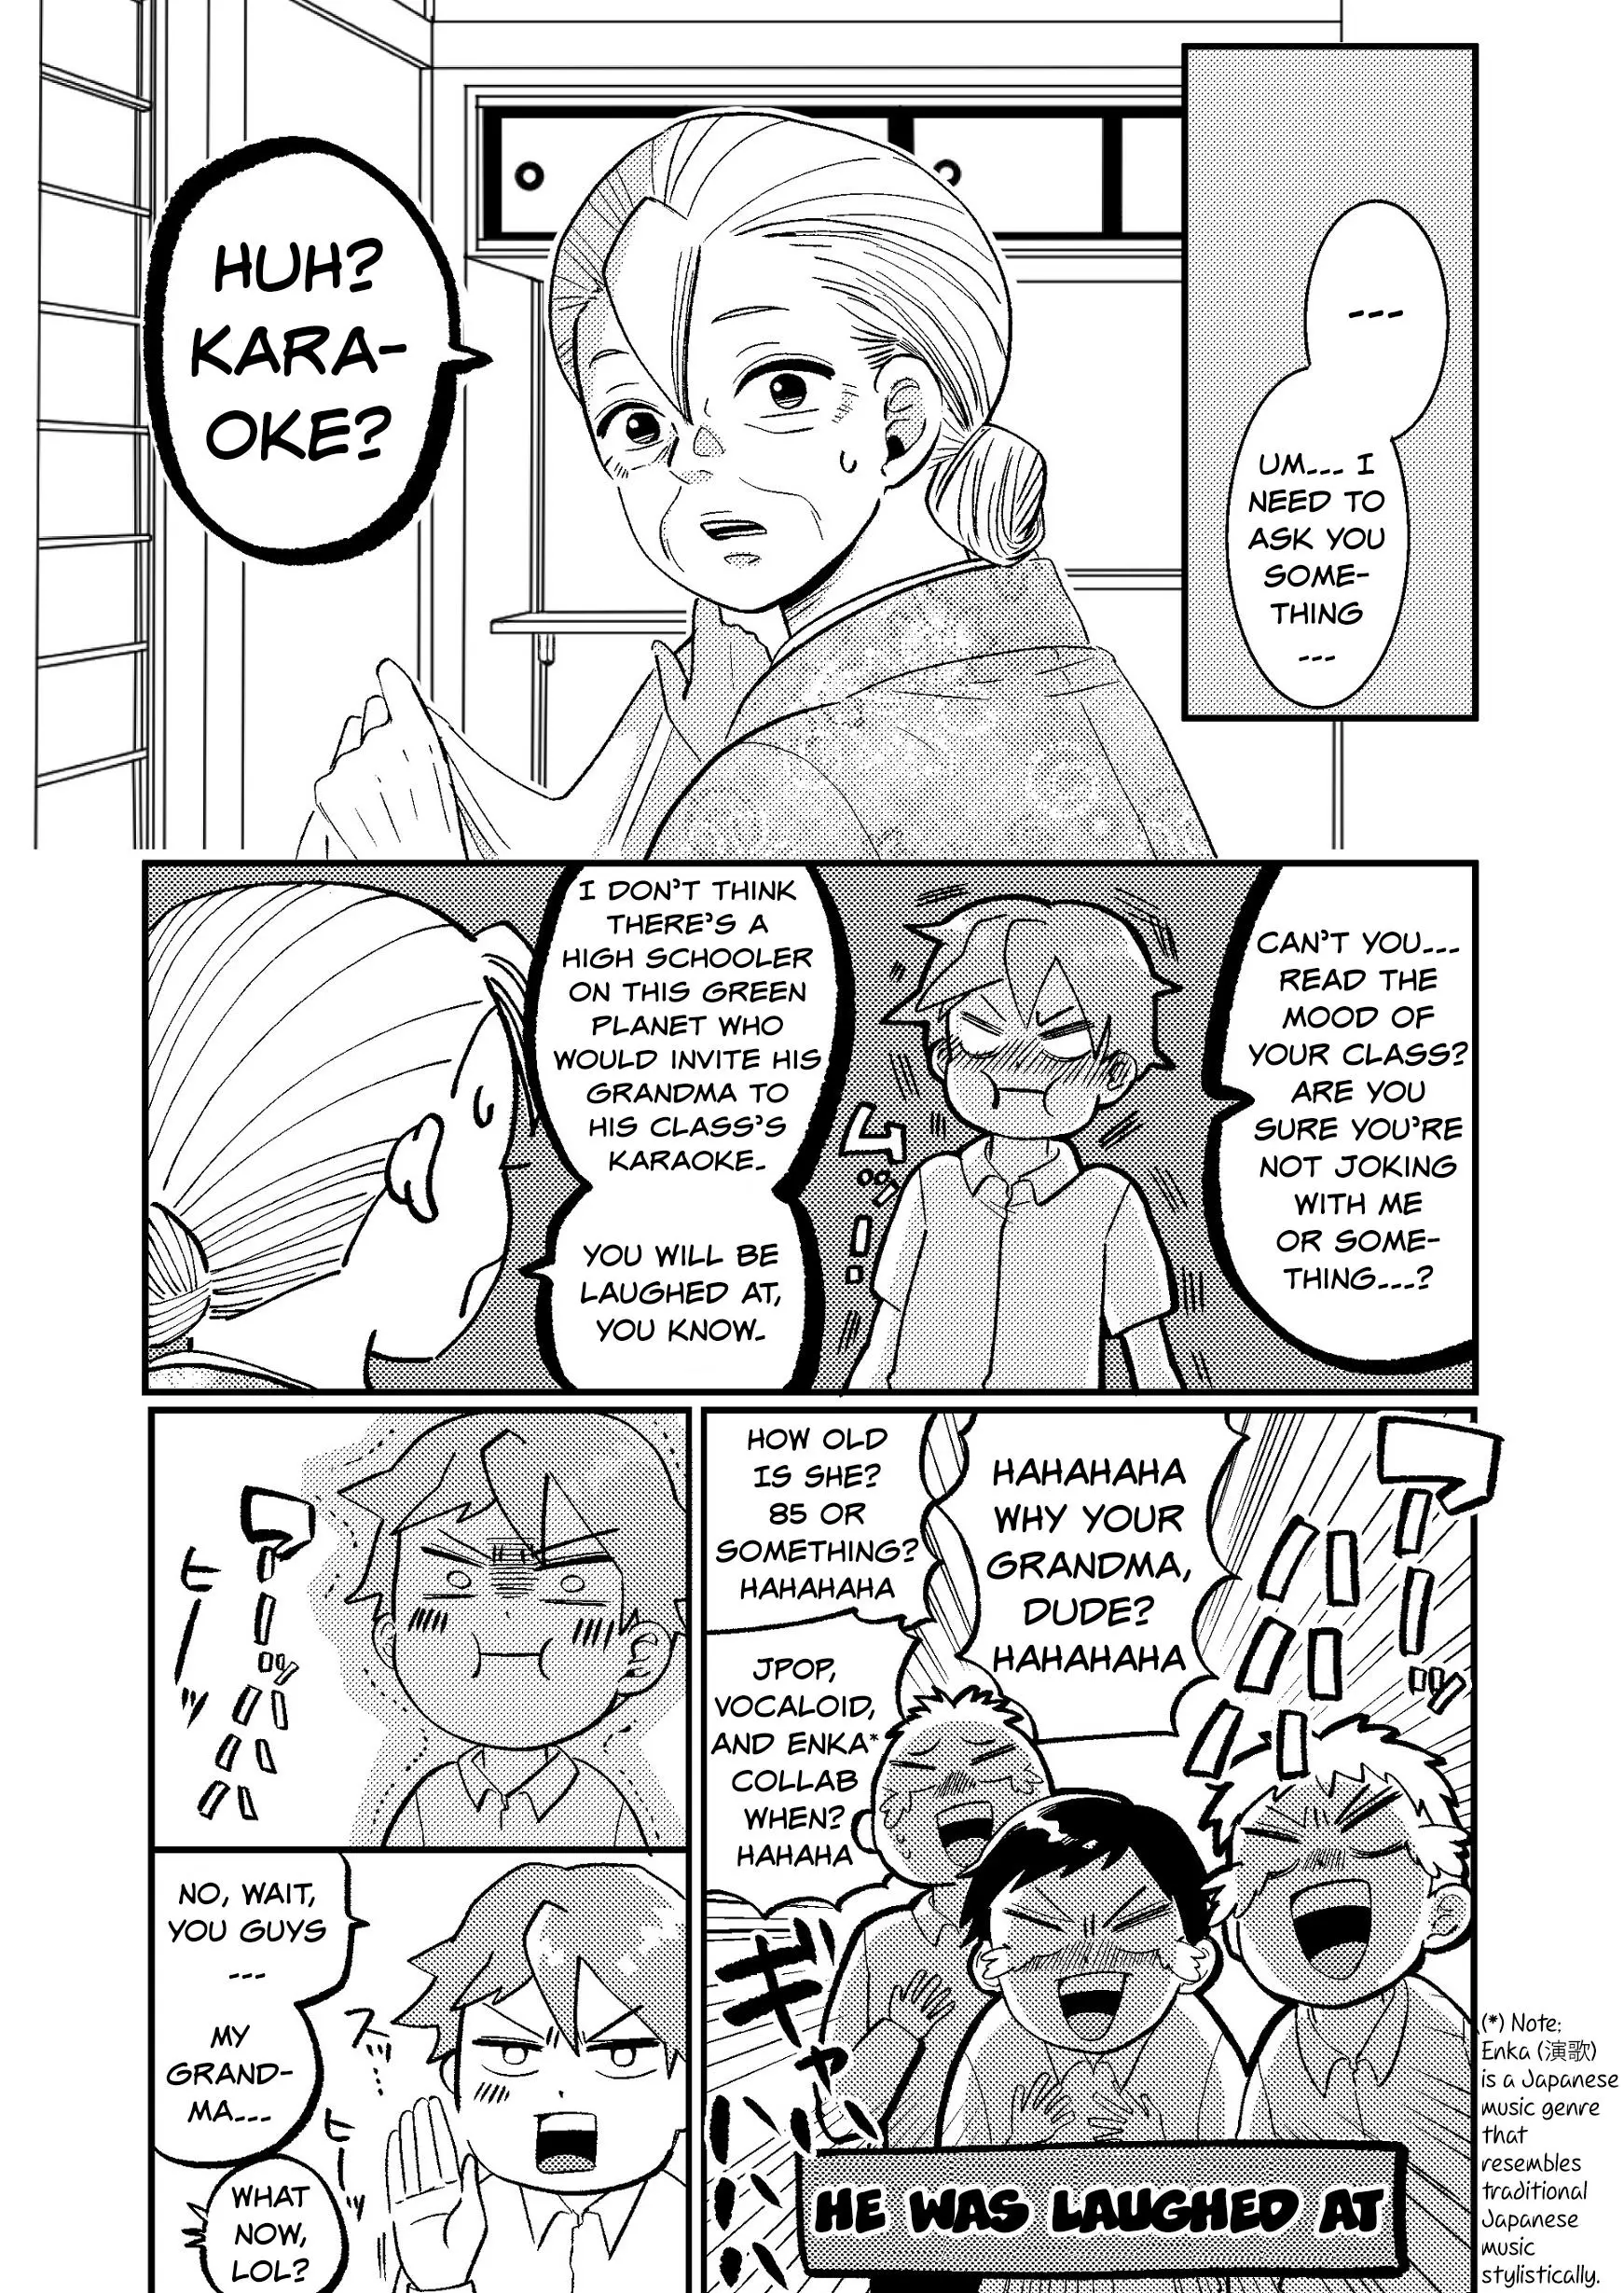 Otaku Grandma - 8 page 2-16cde593